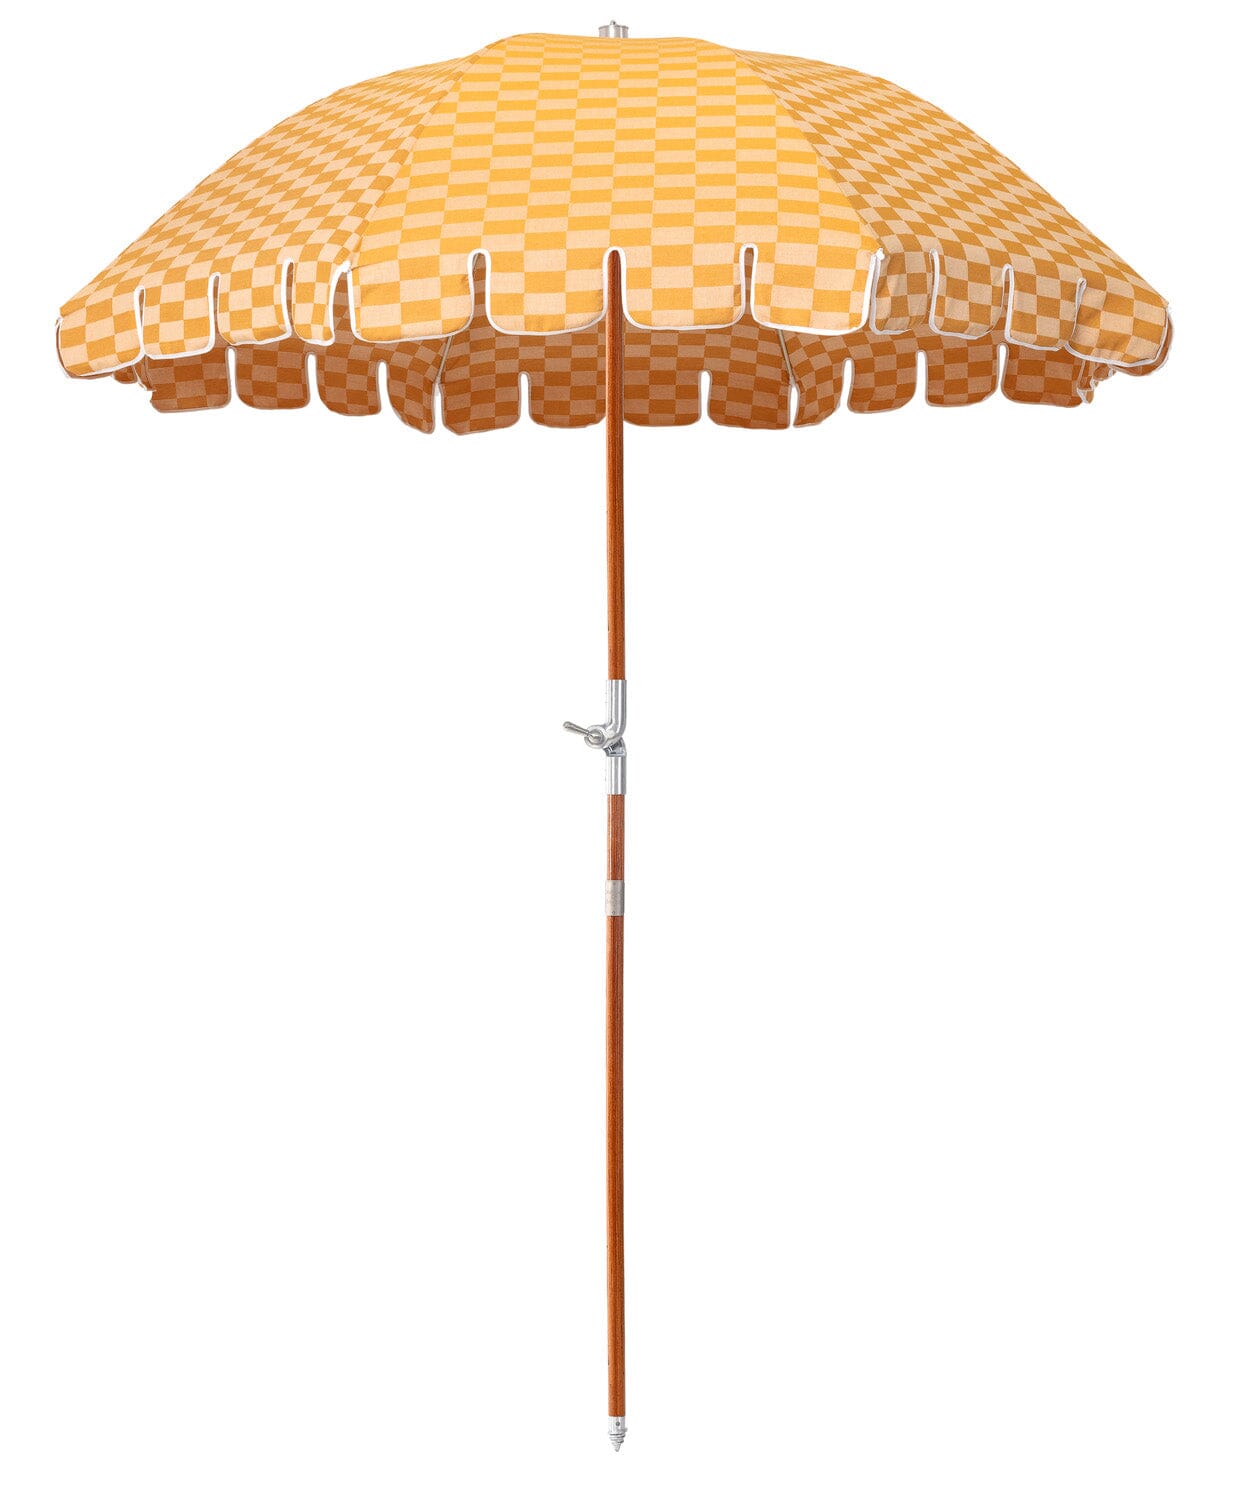 The Premium Beach Umbrella - Vintage Gold Check